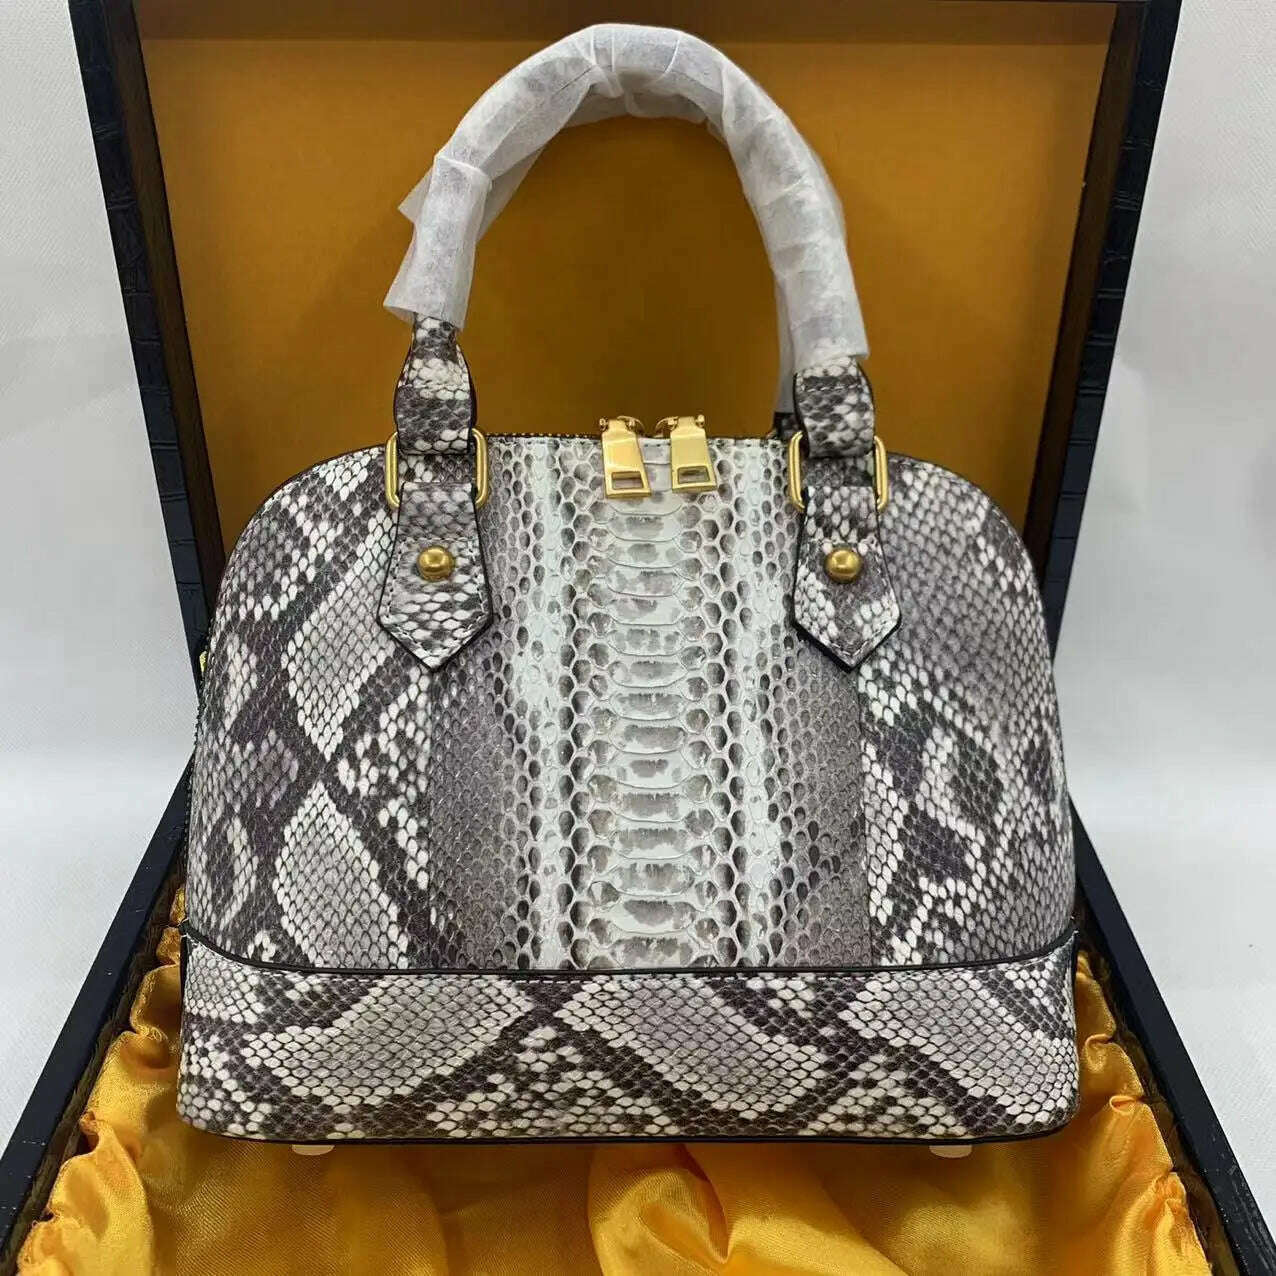 KIMLUD, Luxury Brand Women's Bag Noble Snake Shell Bag European And American Fashion Personalized Bag Famous Designer Handbag For Women, KIMLUD Women's Clothes